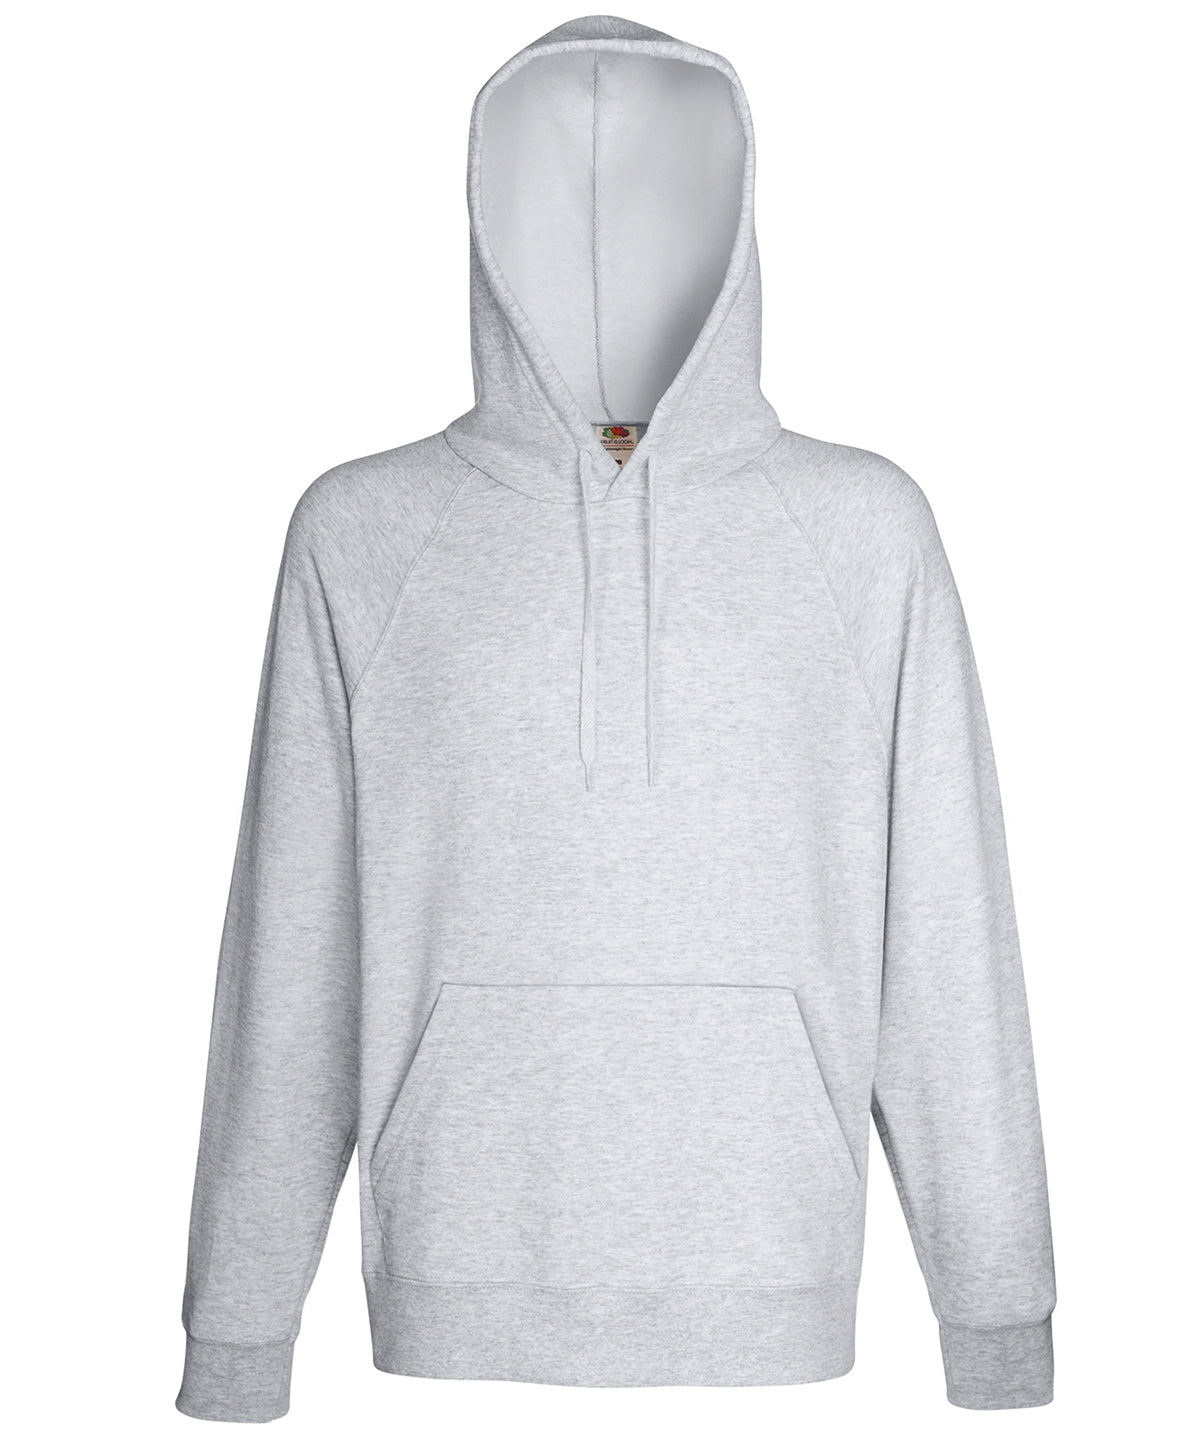 Hettupeysur - Lightweight Hooded Sweatshirt